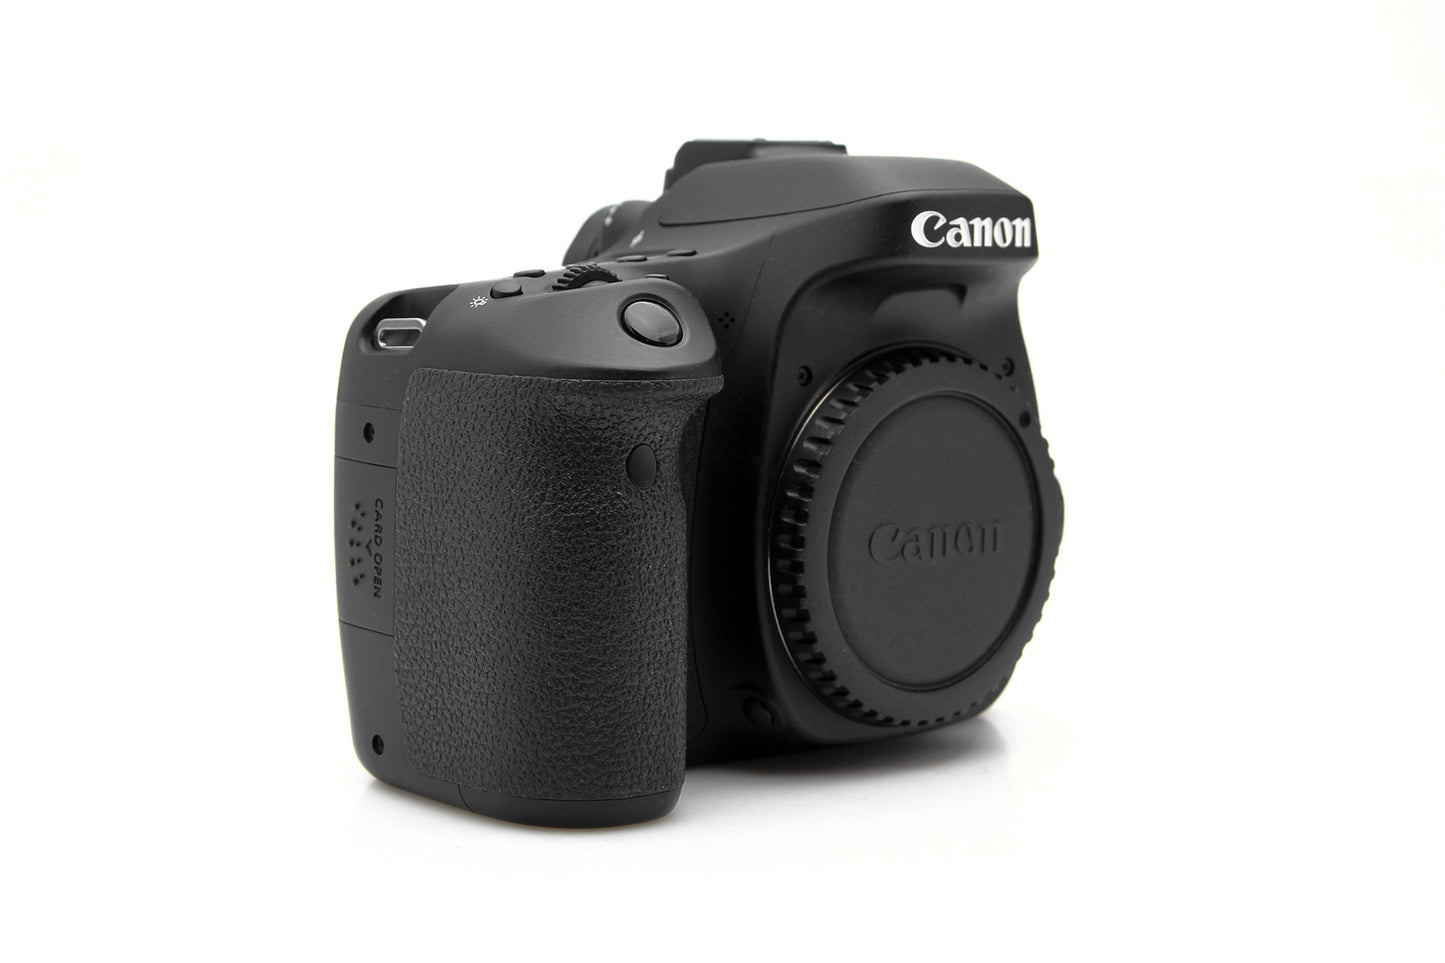 Used Canon 80D Camera Body